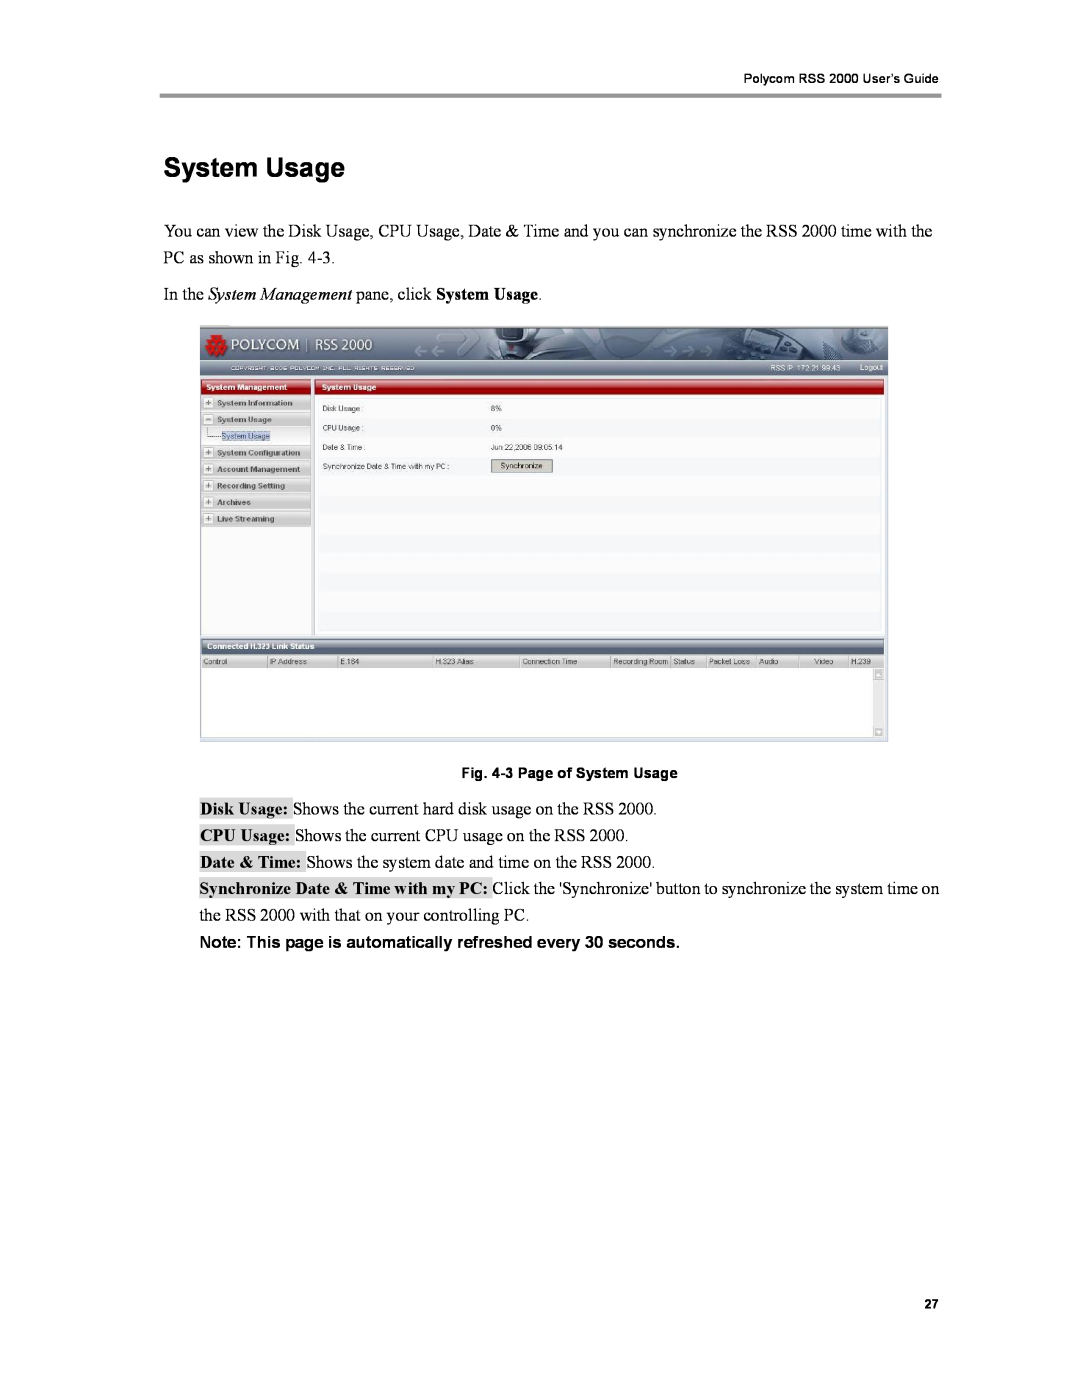 Polycom RSS 2000 manual System Usage 